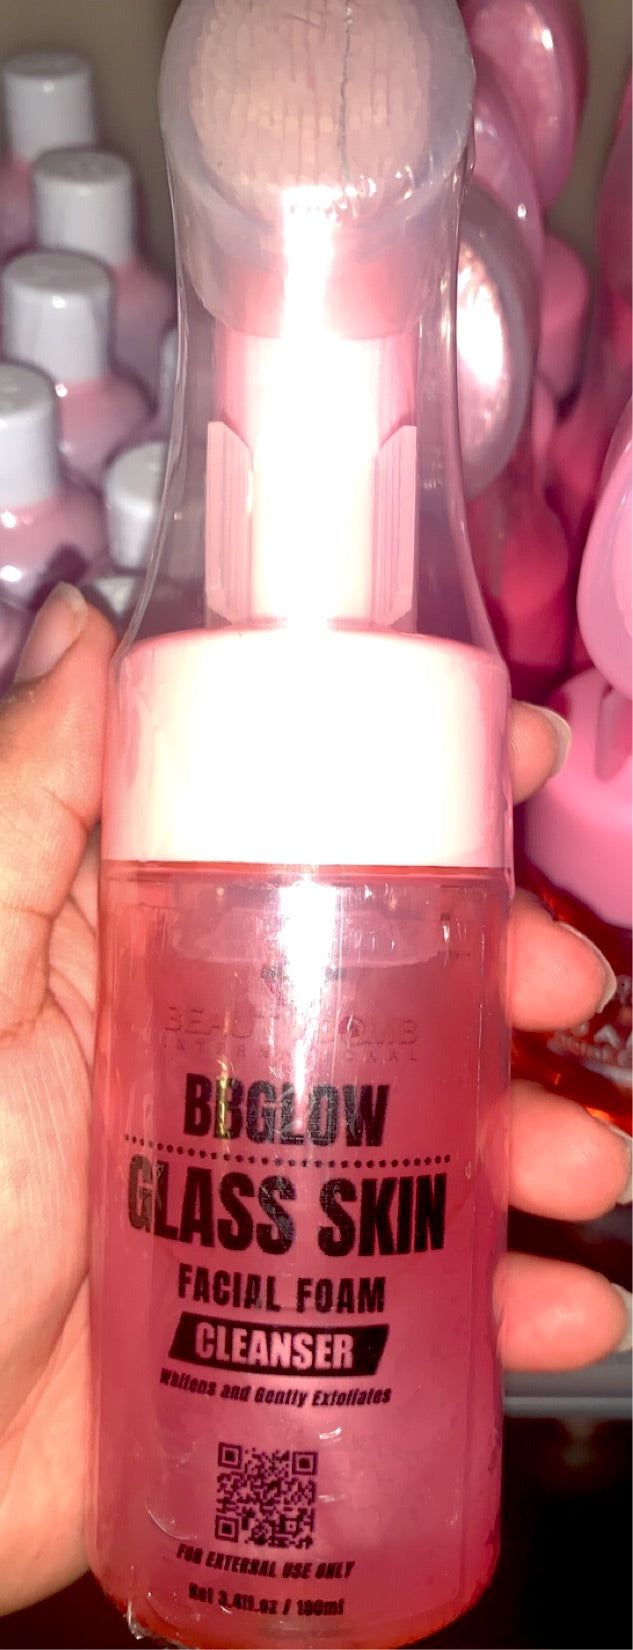 BB Glow Glass Skin Facial Foam Cleanser